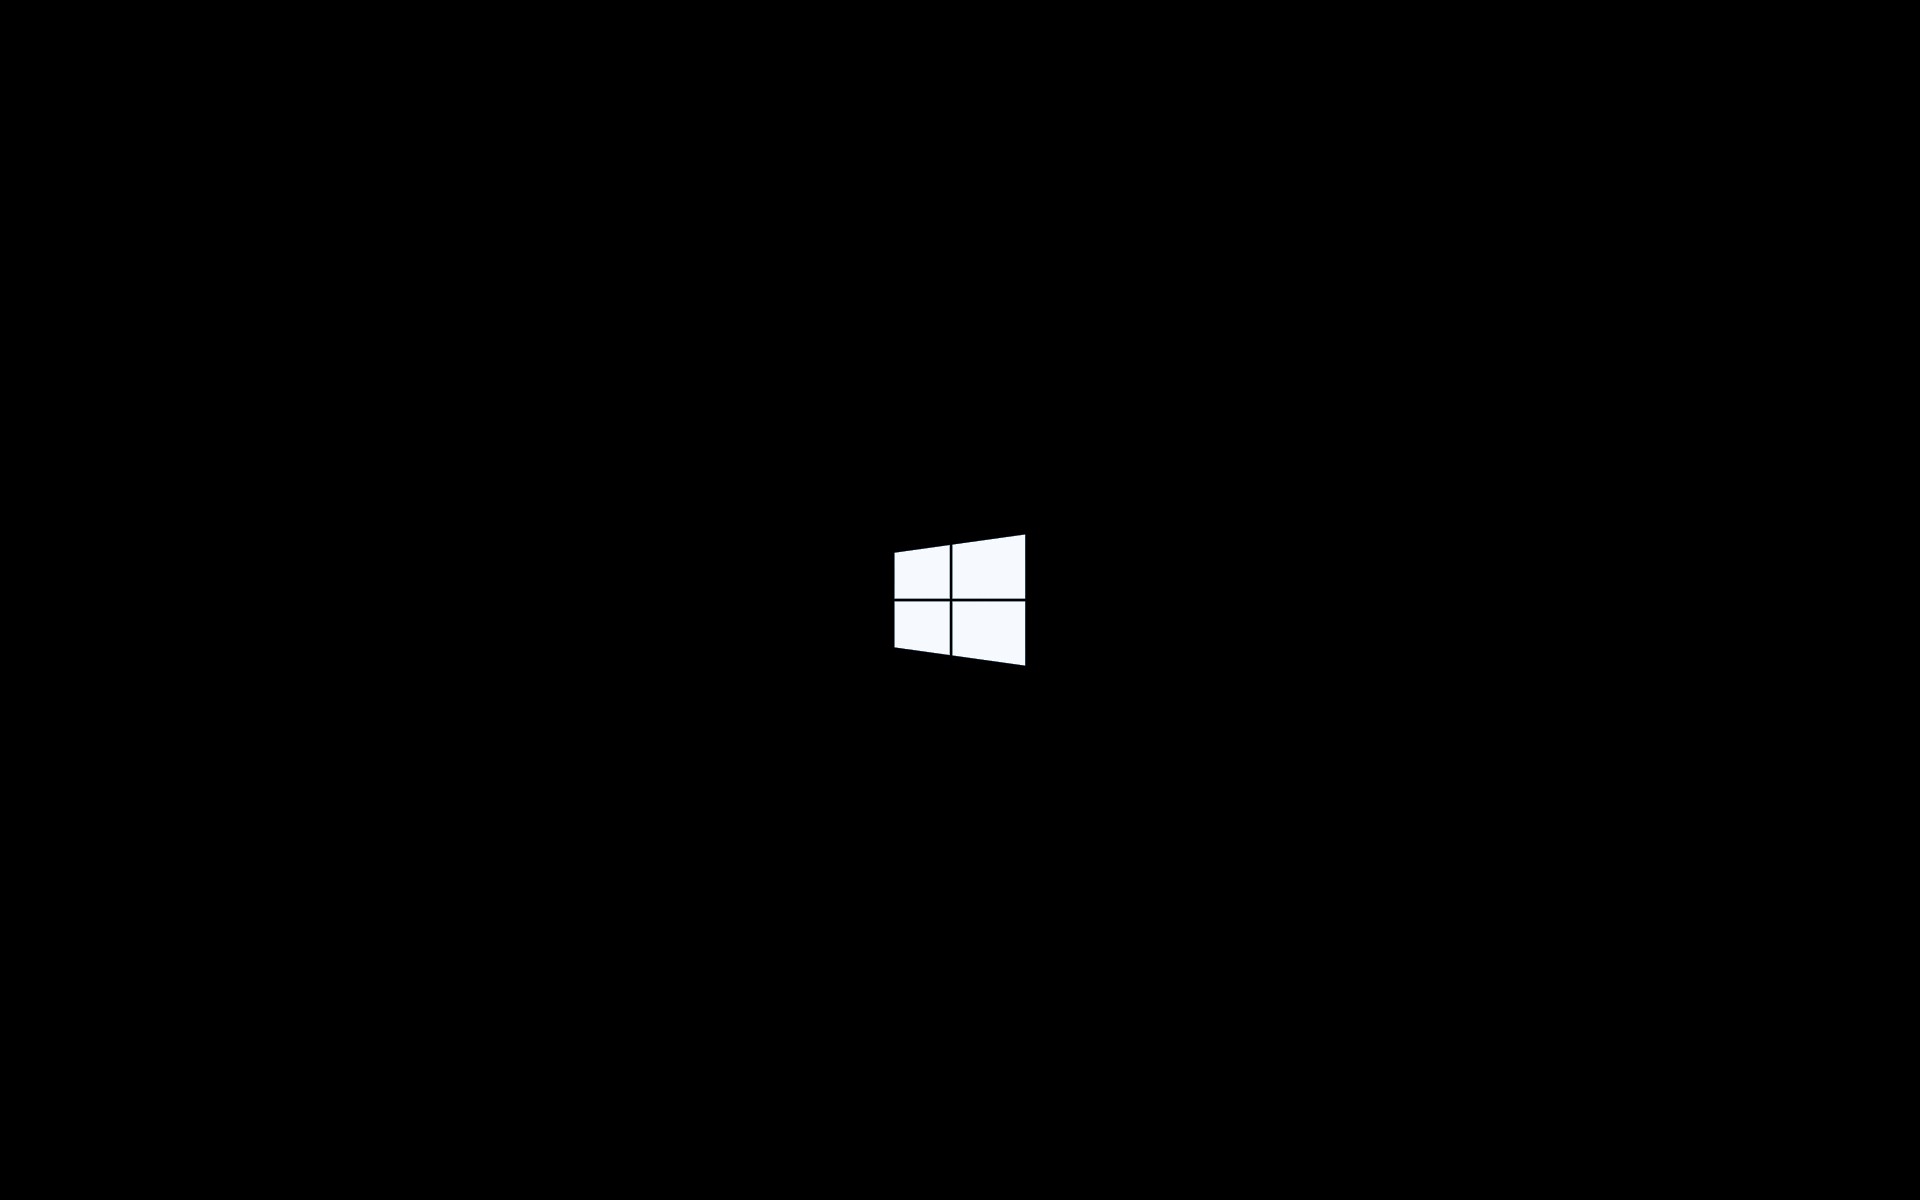 Windows 10, Microsoft Windows, Operating systems, Minimalism, Logo Wallpaper